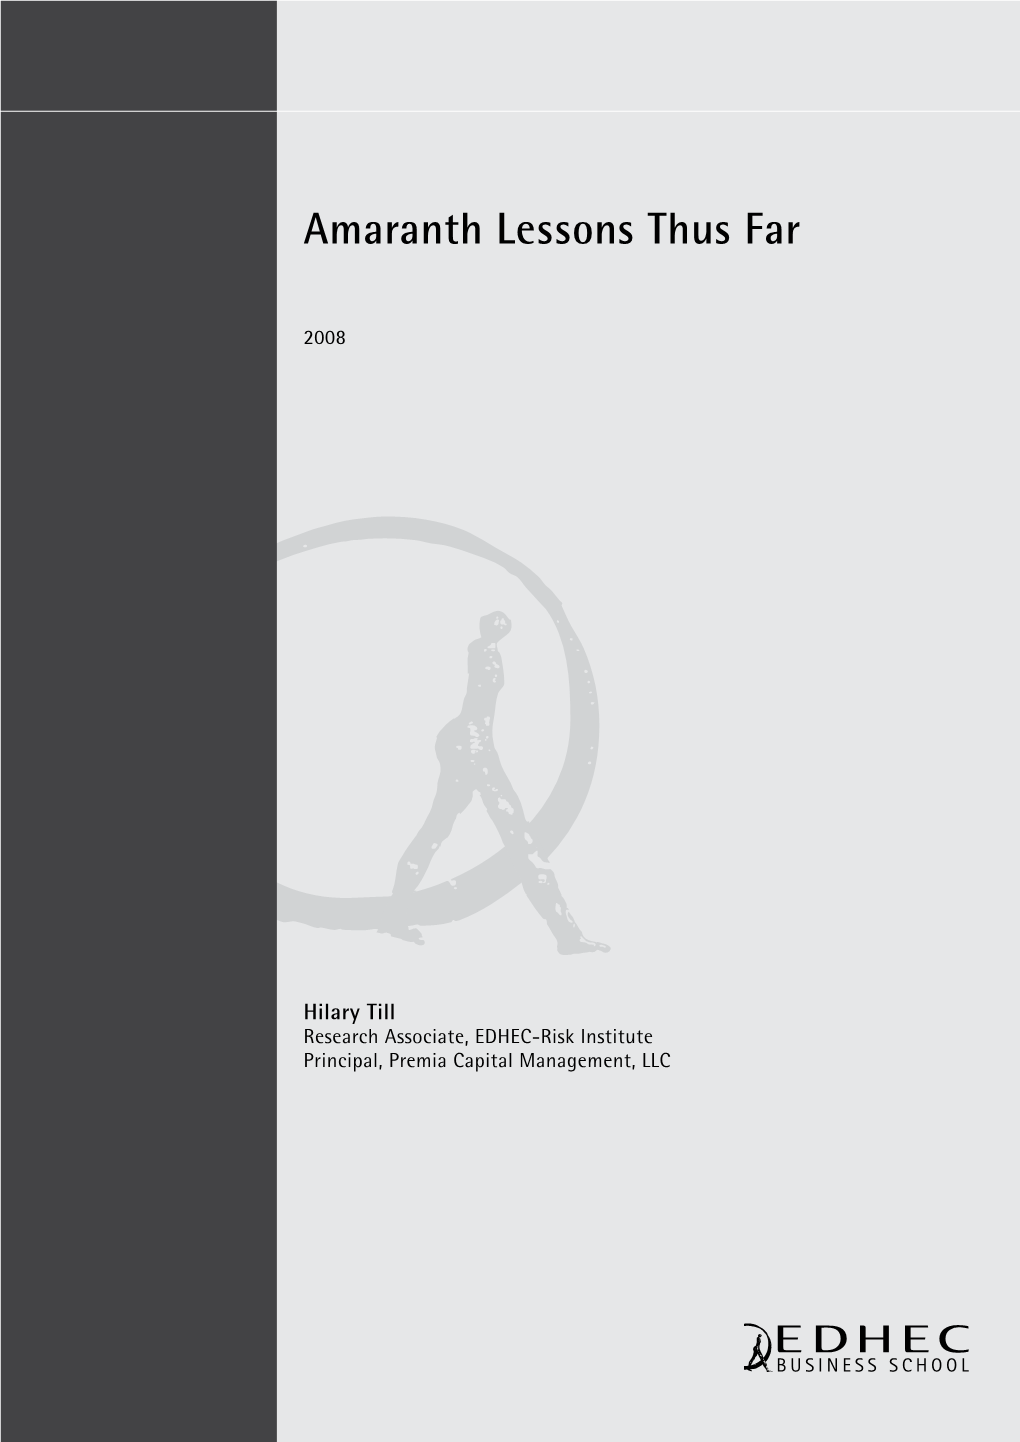 Amaranth Lessons Thus Far